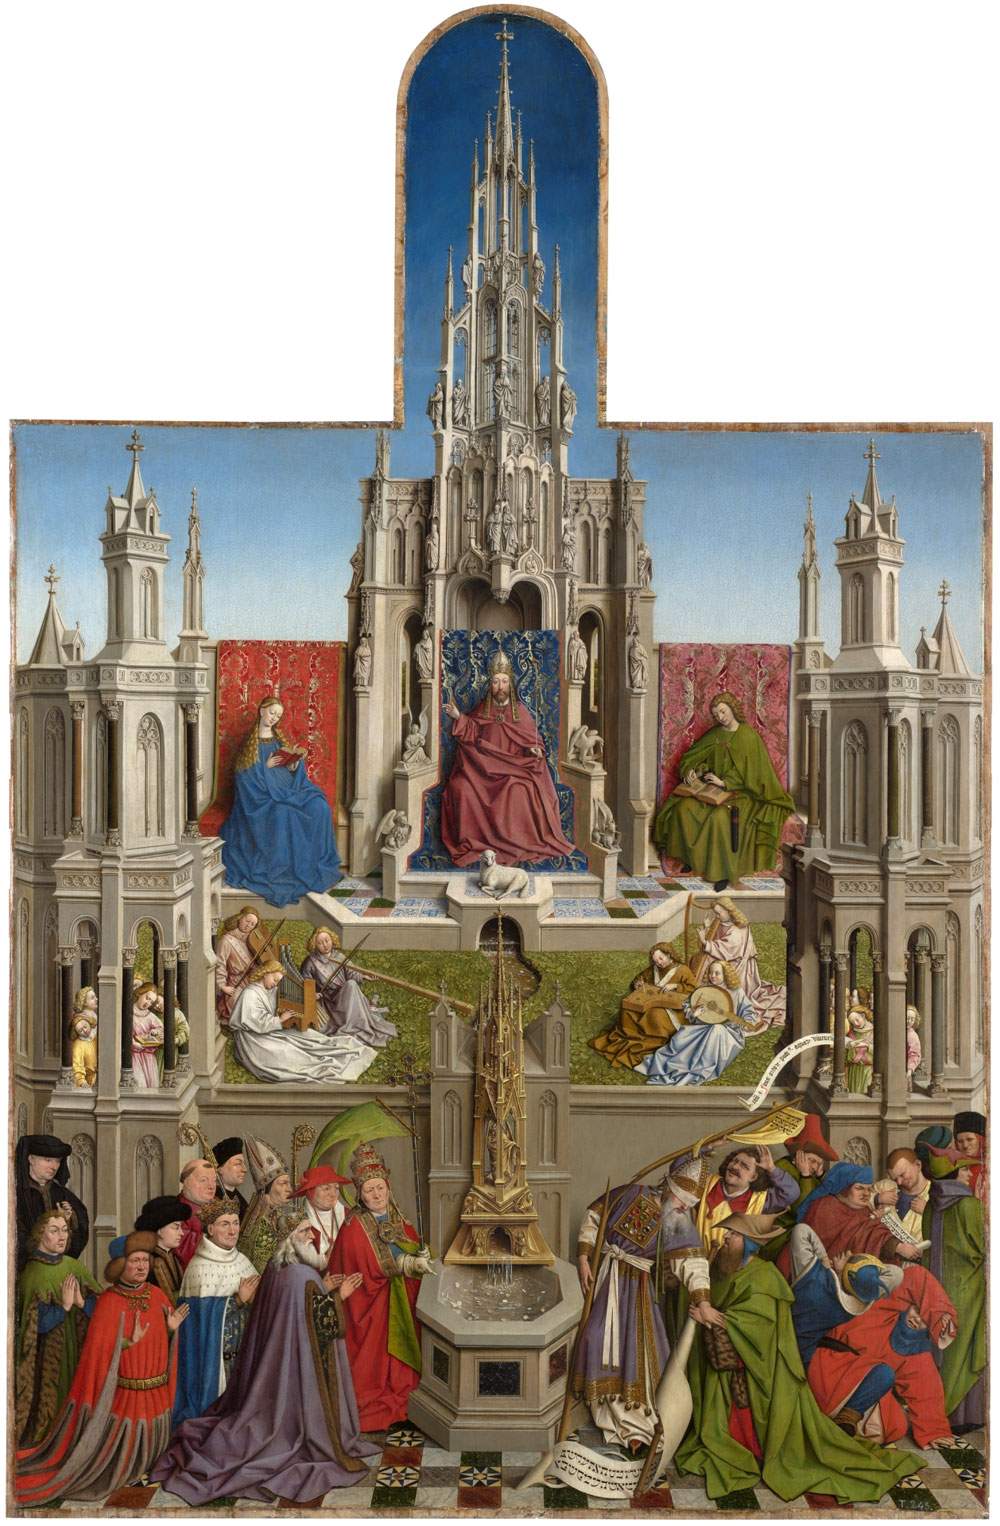 The Fuente de la Gracia is shown restored at the Prado Museum